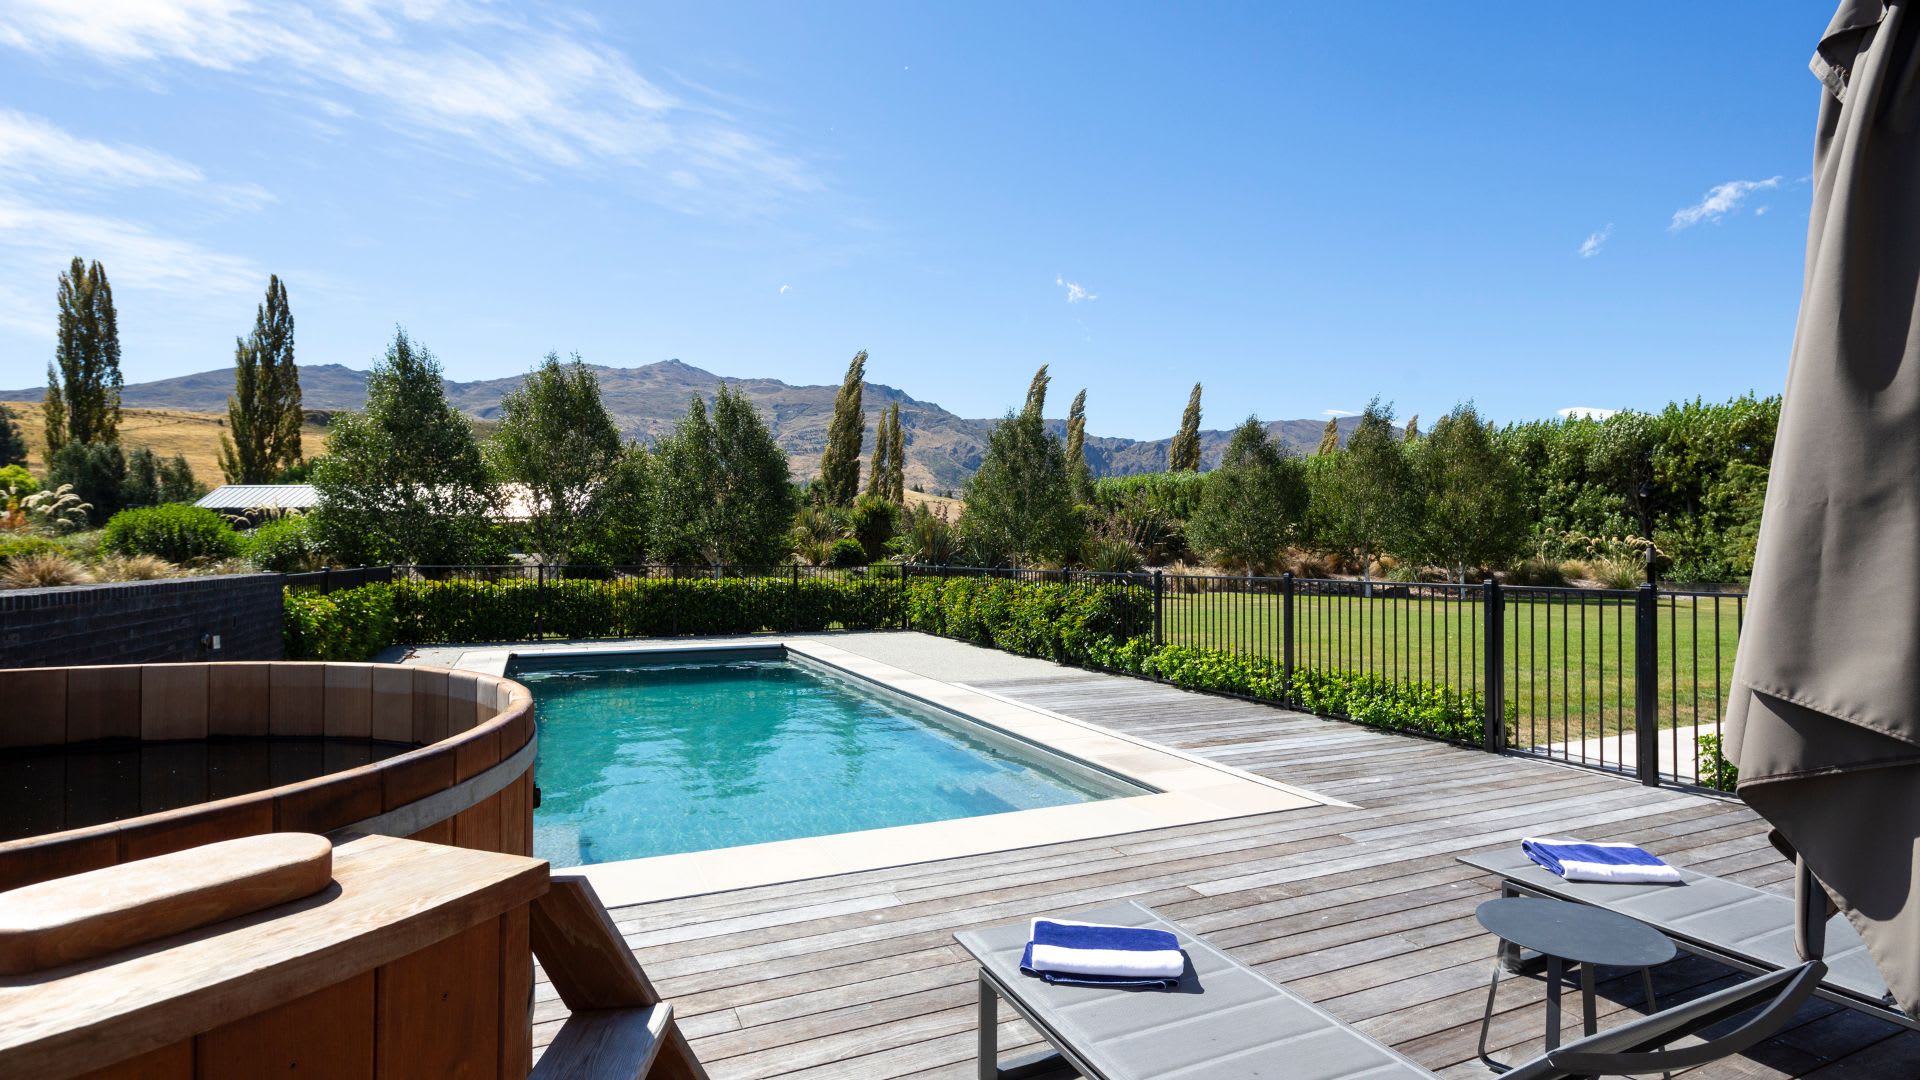 Enjoy the pool with stunning views all around - NZ luxury travel